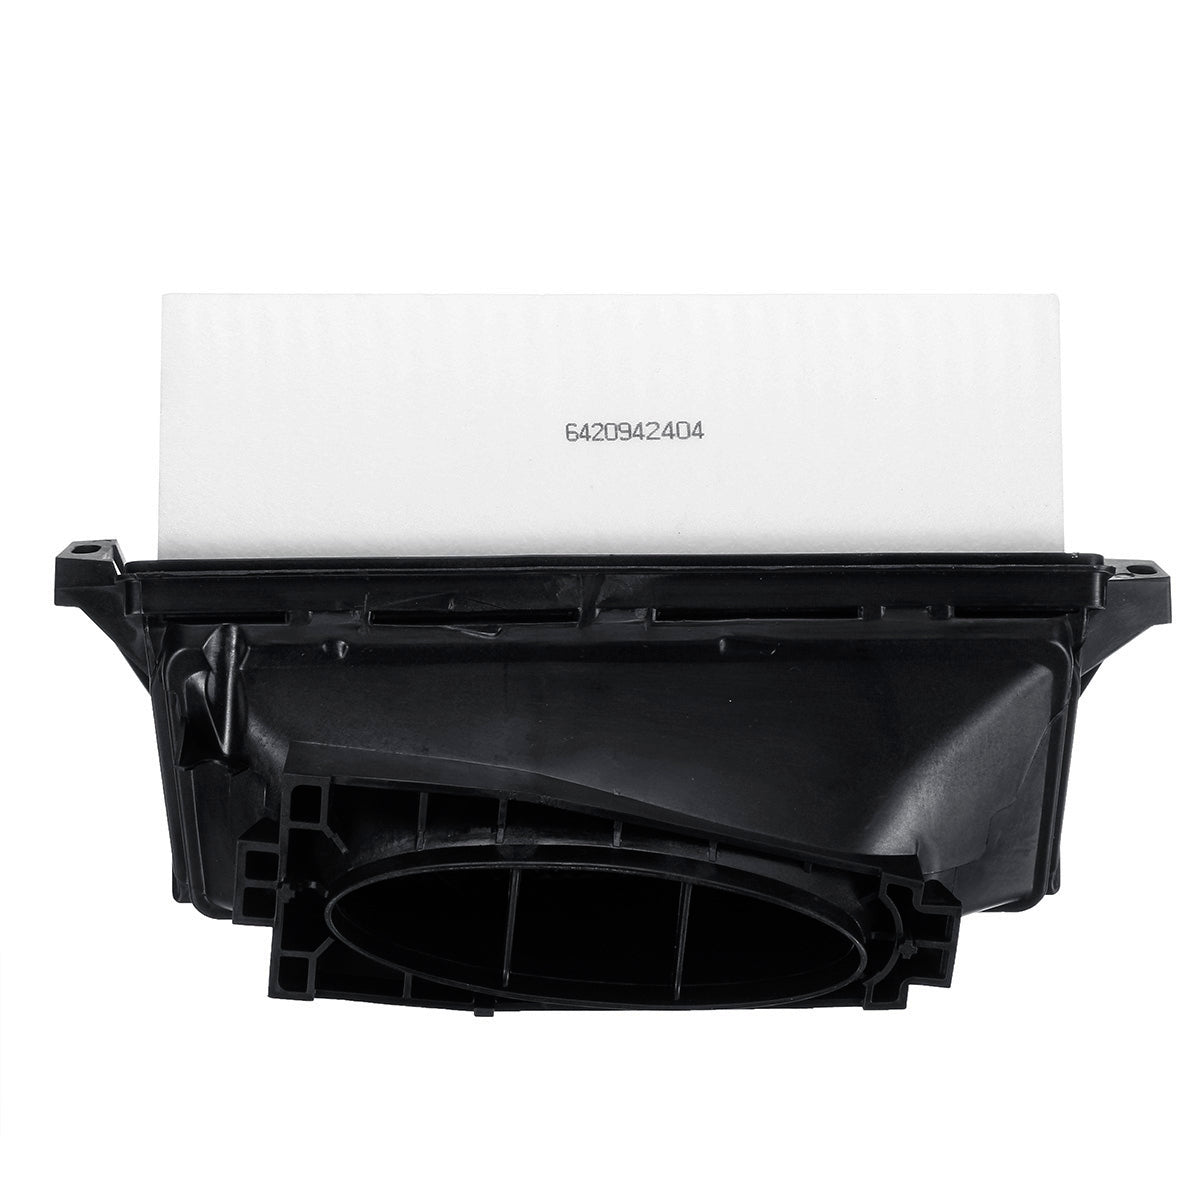 2pcs Car Air Filters A6420940000 For Mercedes OM642 300/350 CDI Left &Right - Auto GoShop